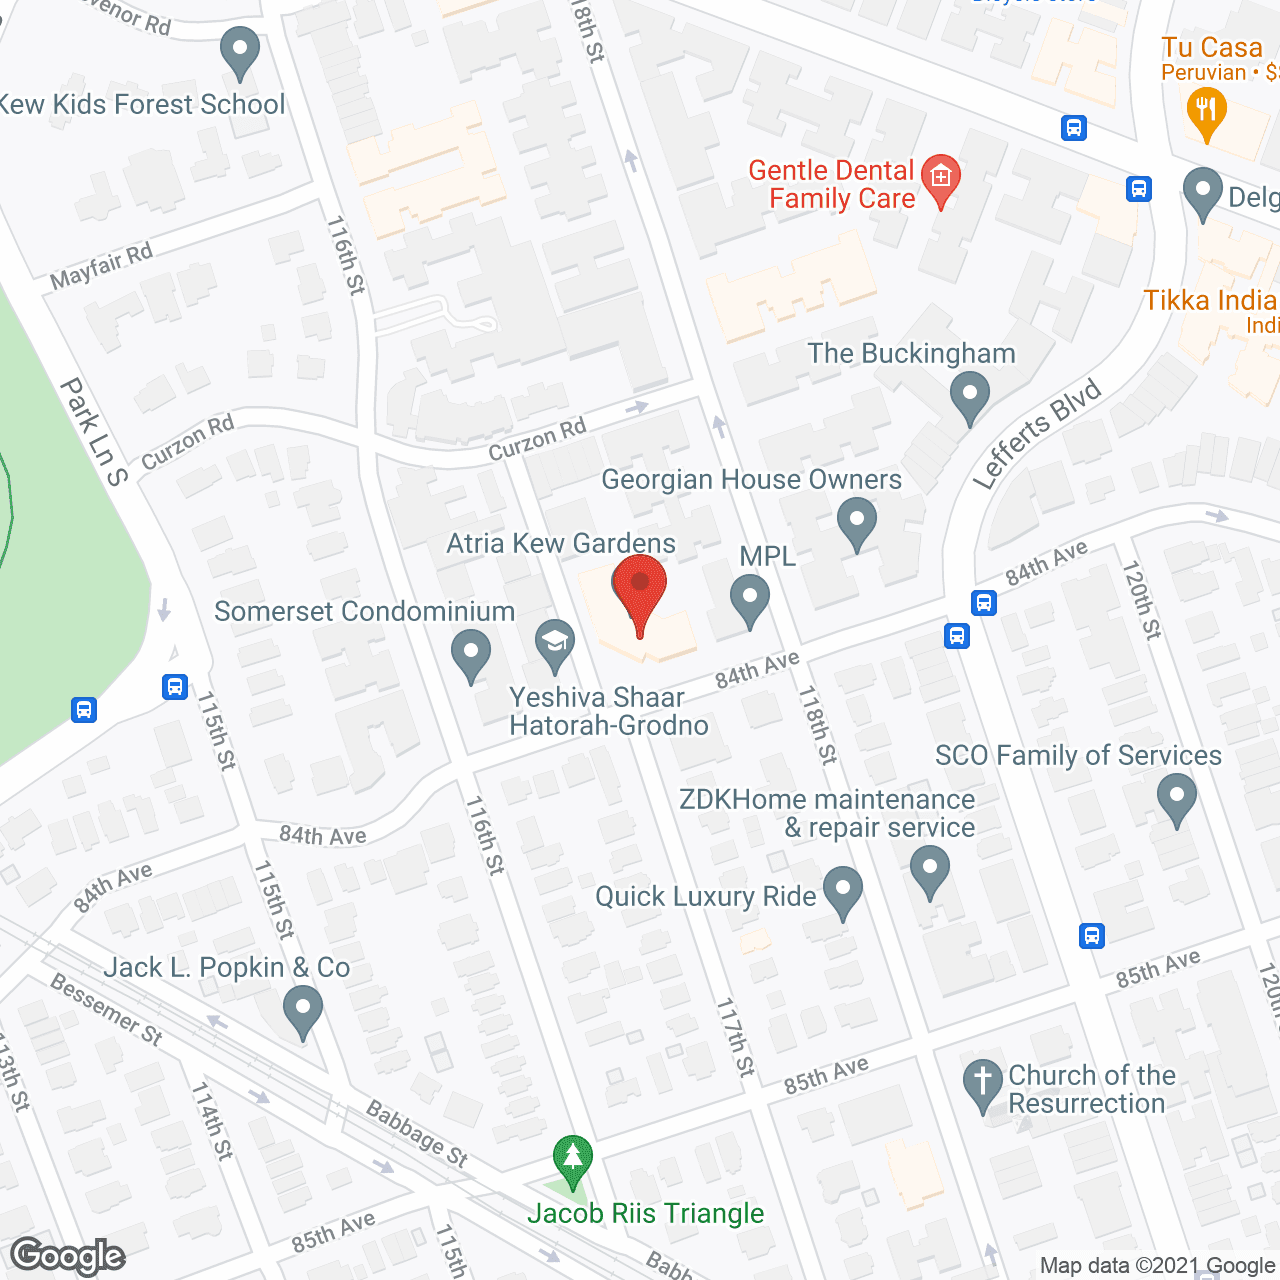 Atria Kew Gardens in google map